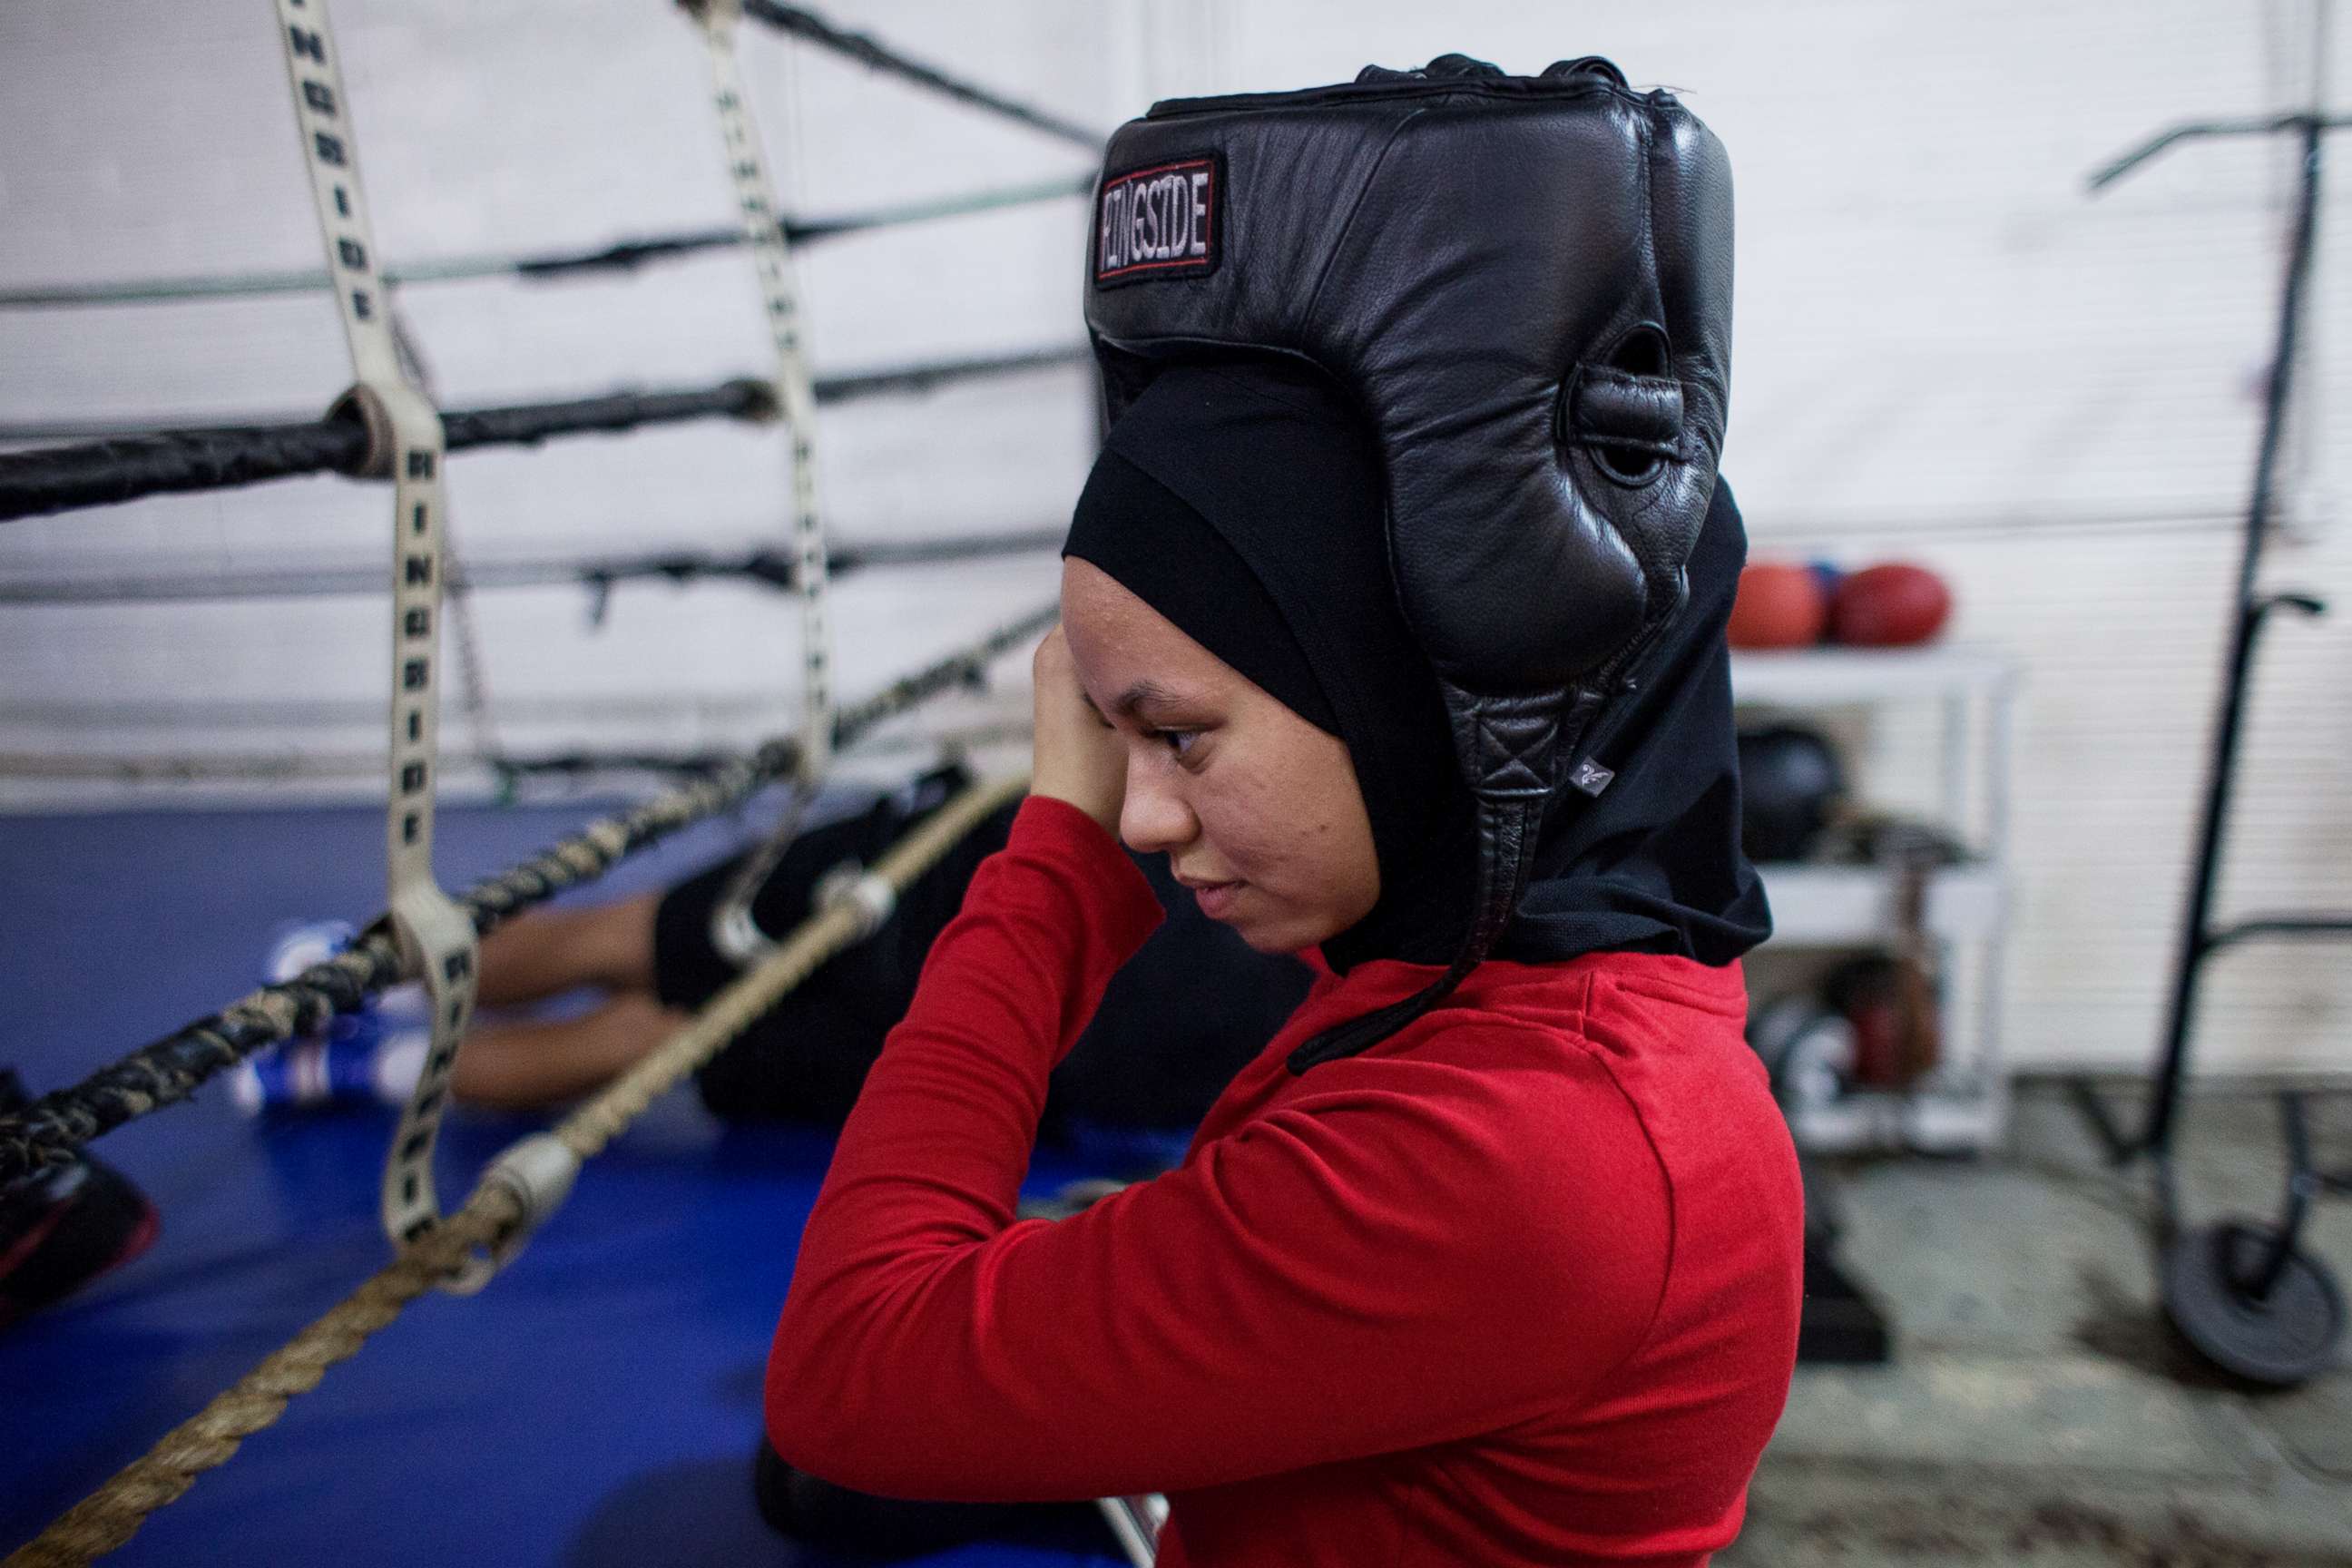 PHOTO: Amaiya wears her hijab under her helmet as she prepares to spar at Circile of Discipline gym.